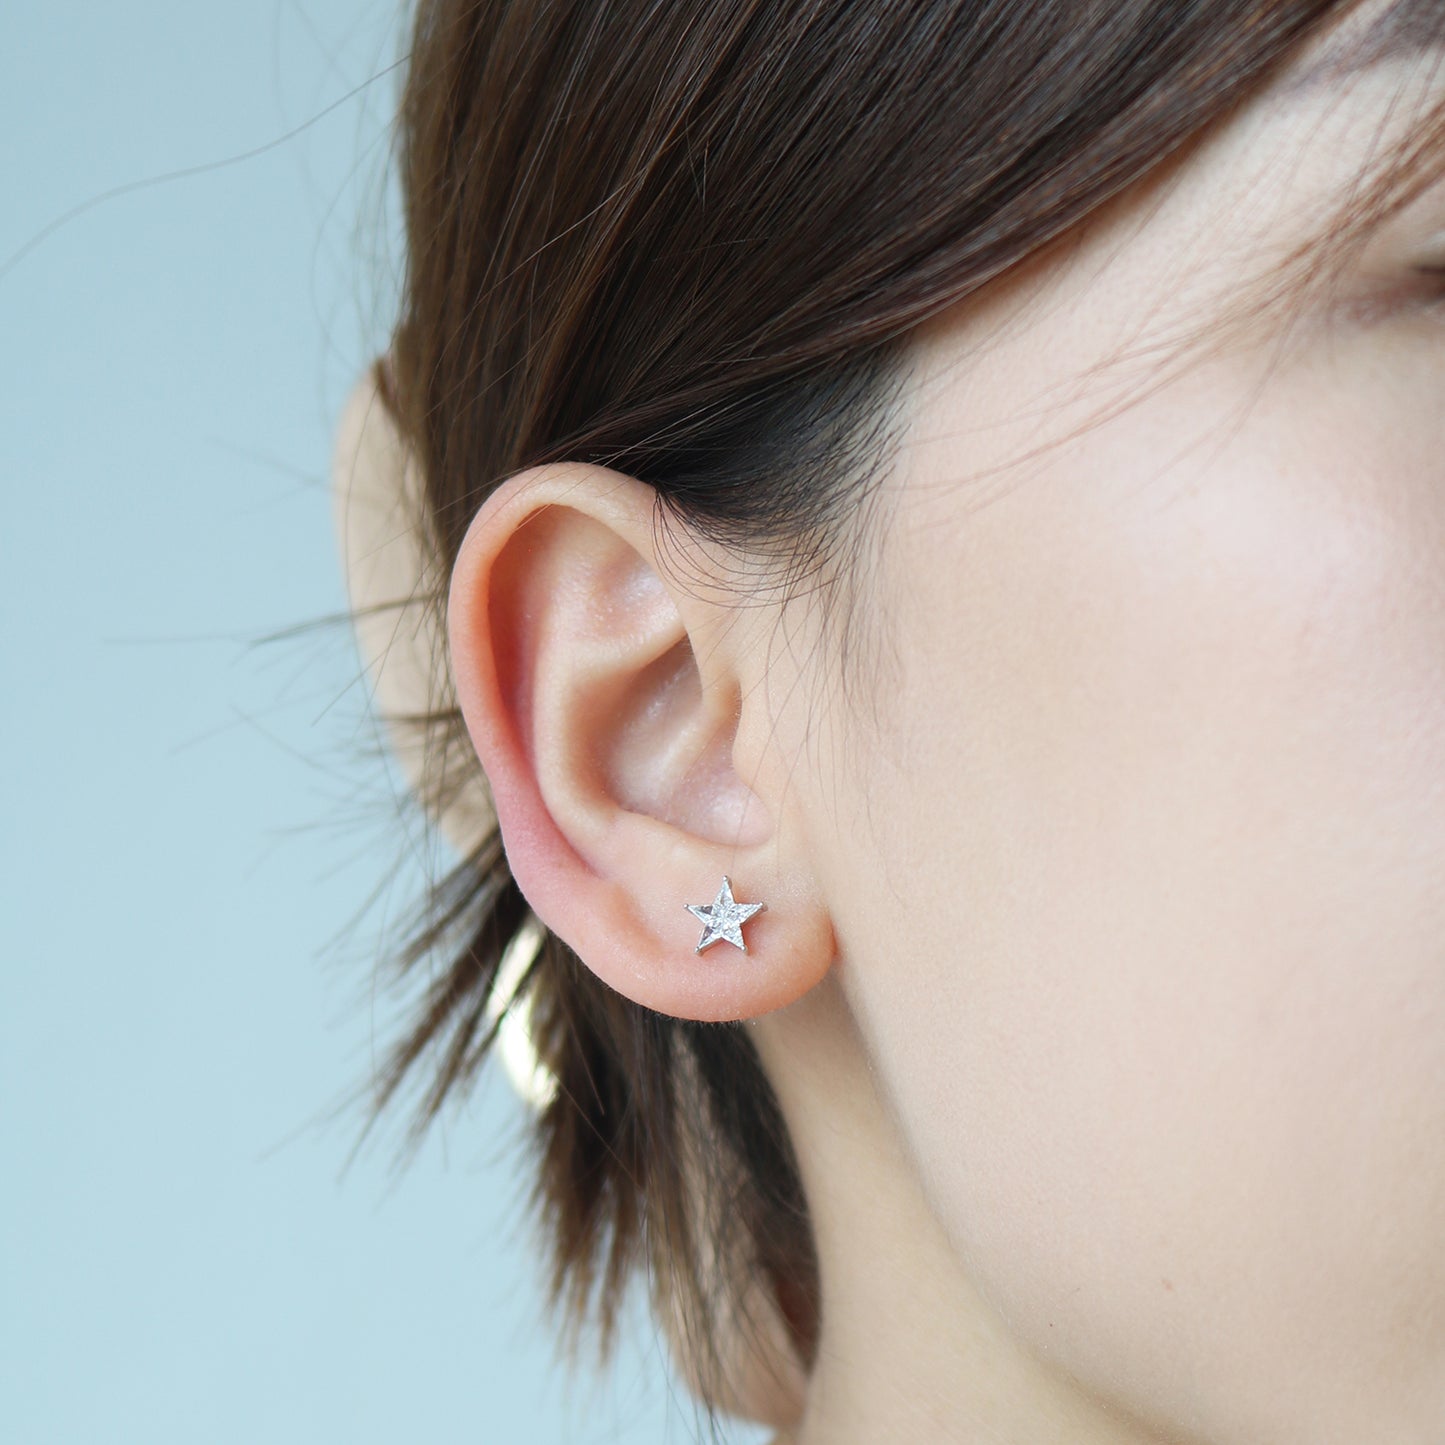 18k White Gold Pie Cut Star Diamond Earrings, Single or Pair